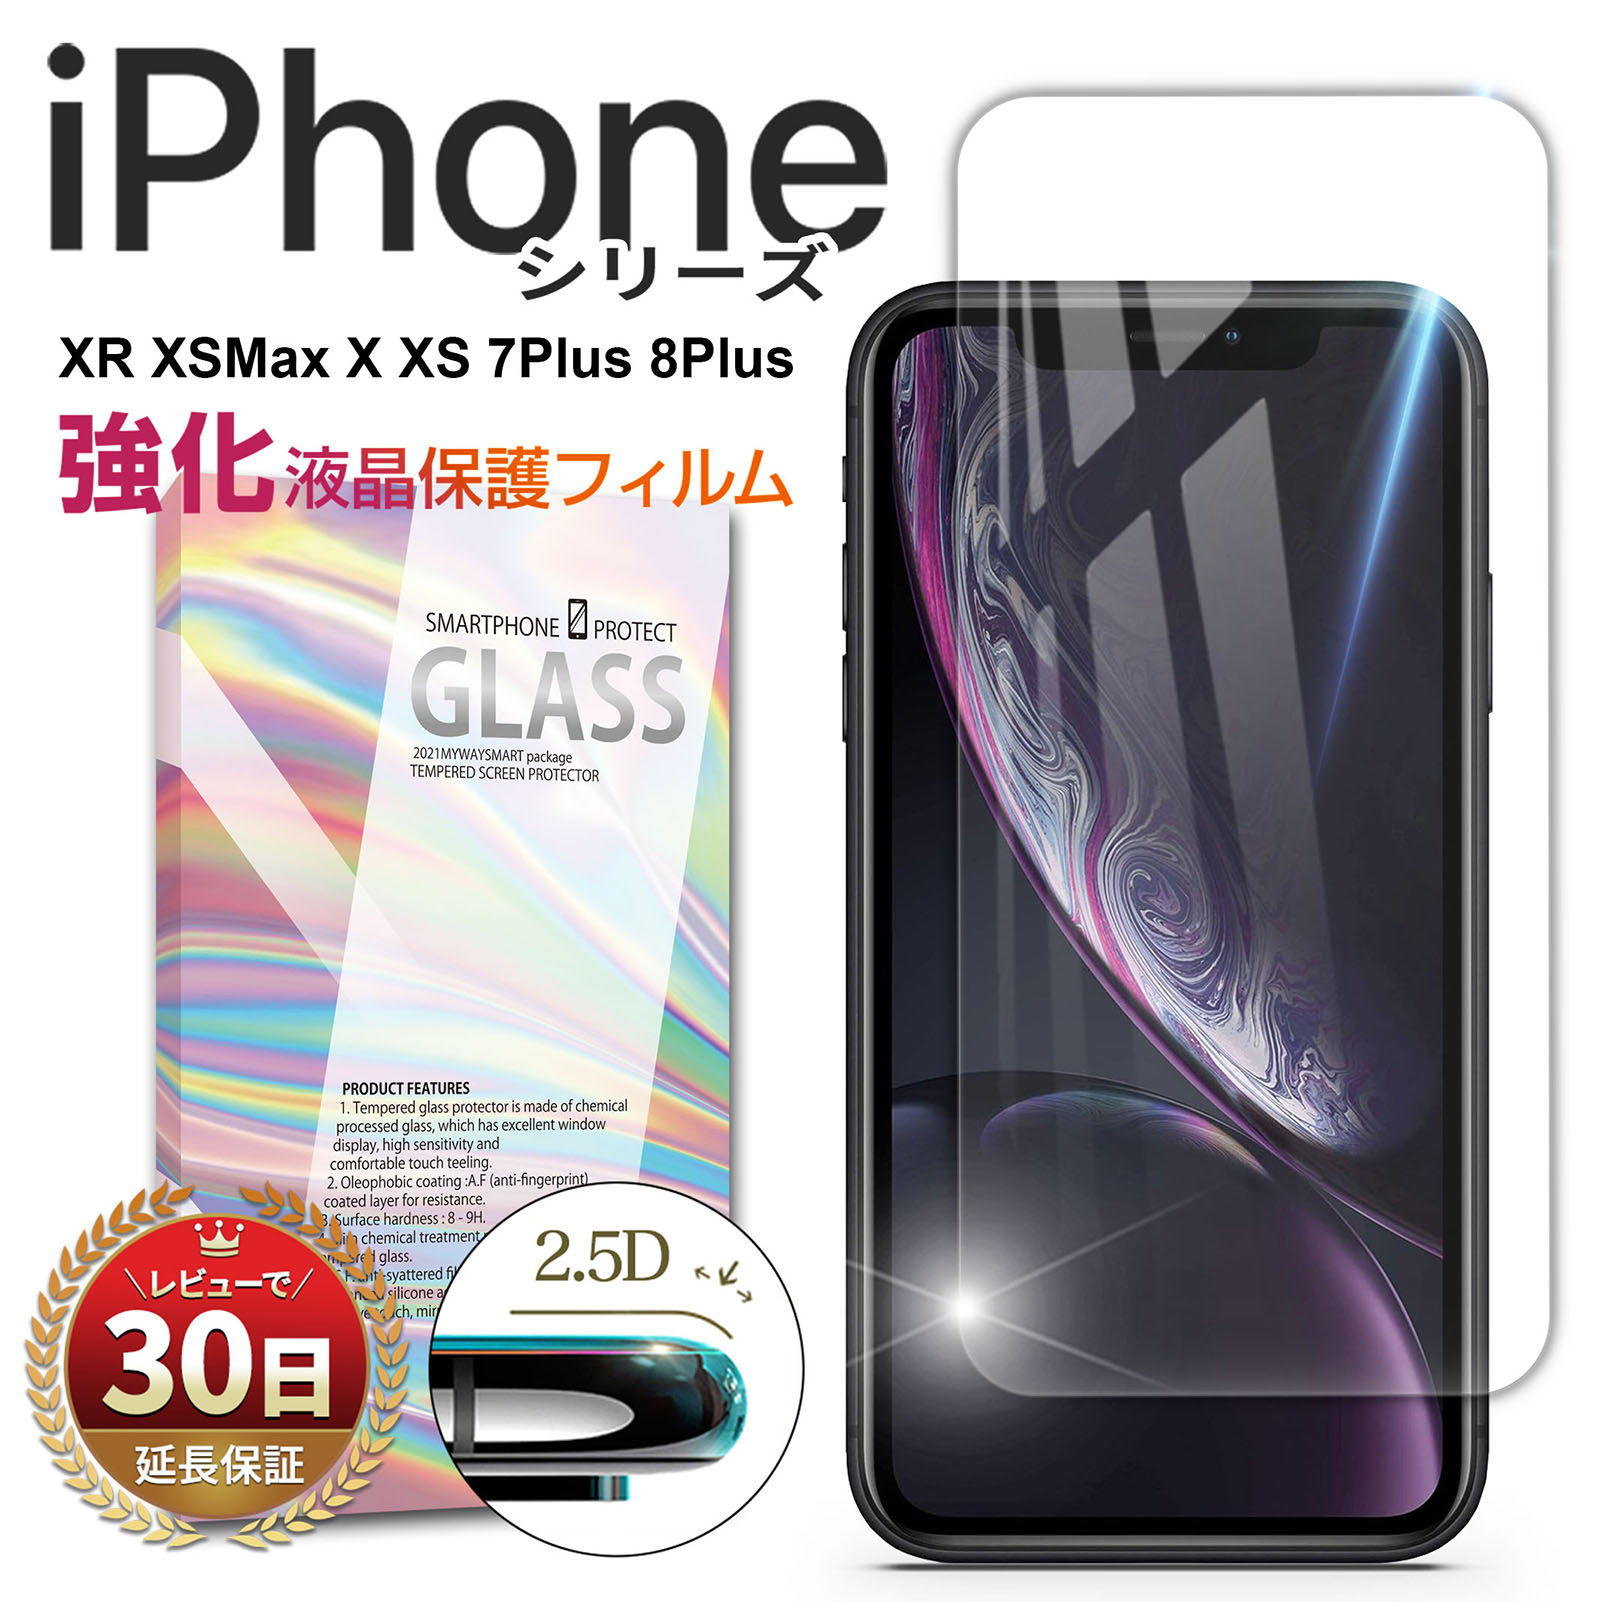 iPhone XR XSMax X XS 7Plus 8Plus ガラス フィルム 画面が割れないように 保護 スマホの液晶を守る 滑らか 2.5D 硬度 9H クリア